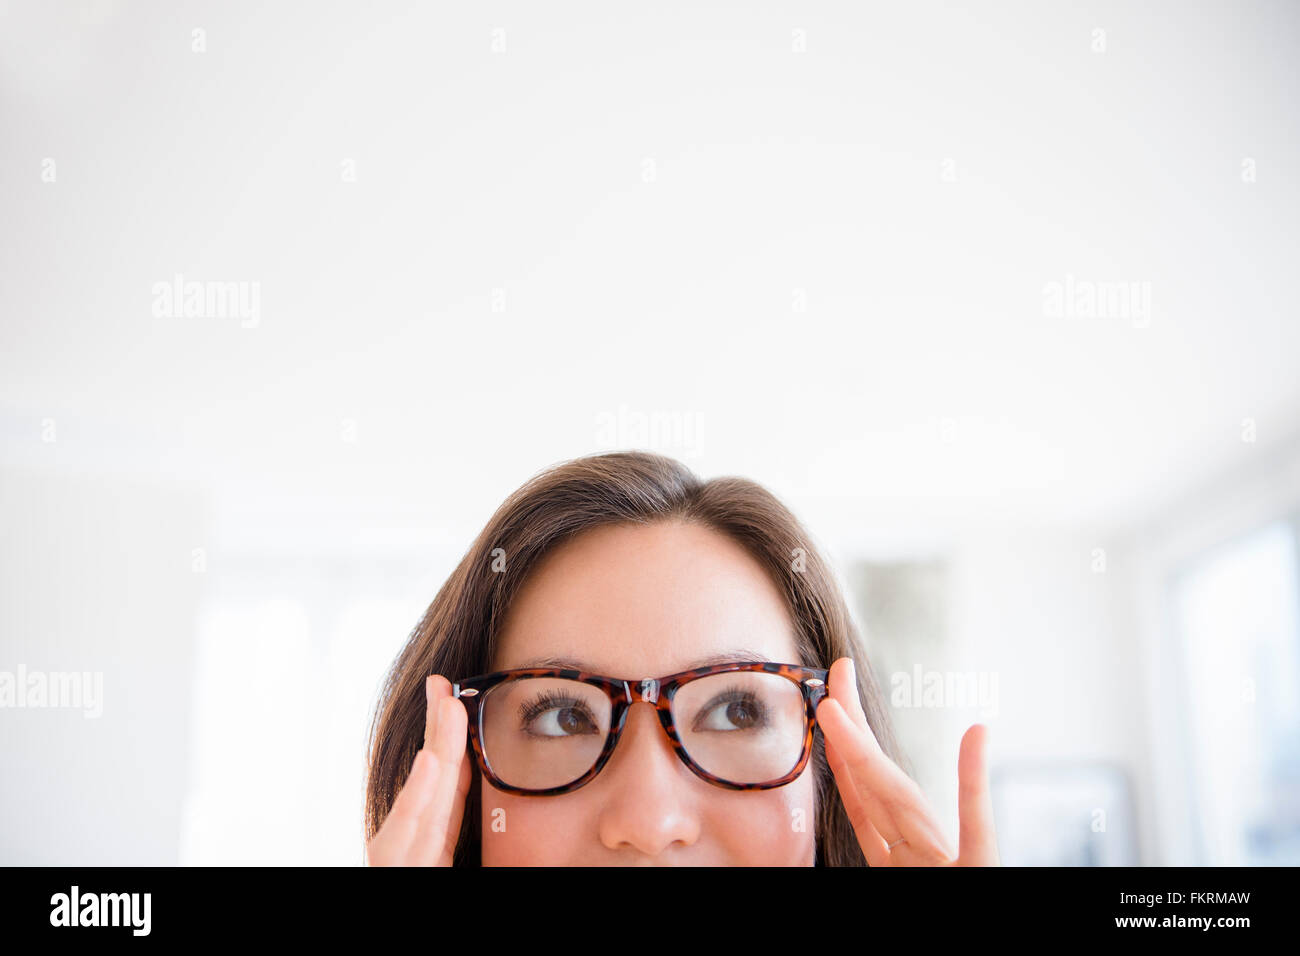 Mixed race woman wearing eyeglasses Stock Photo